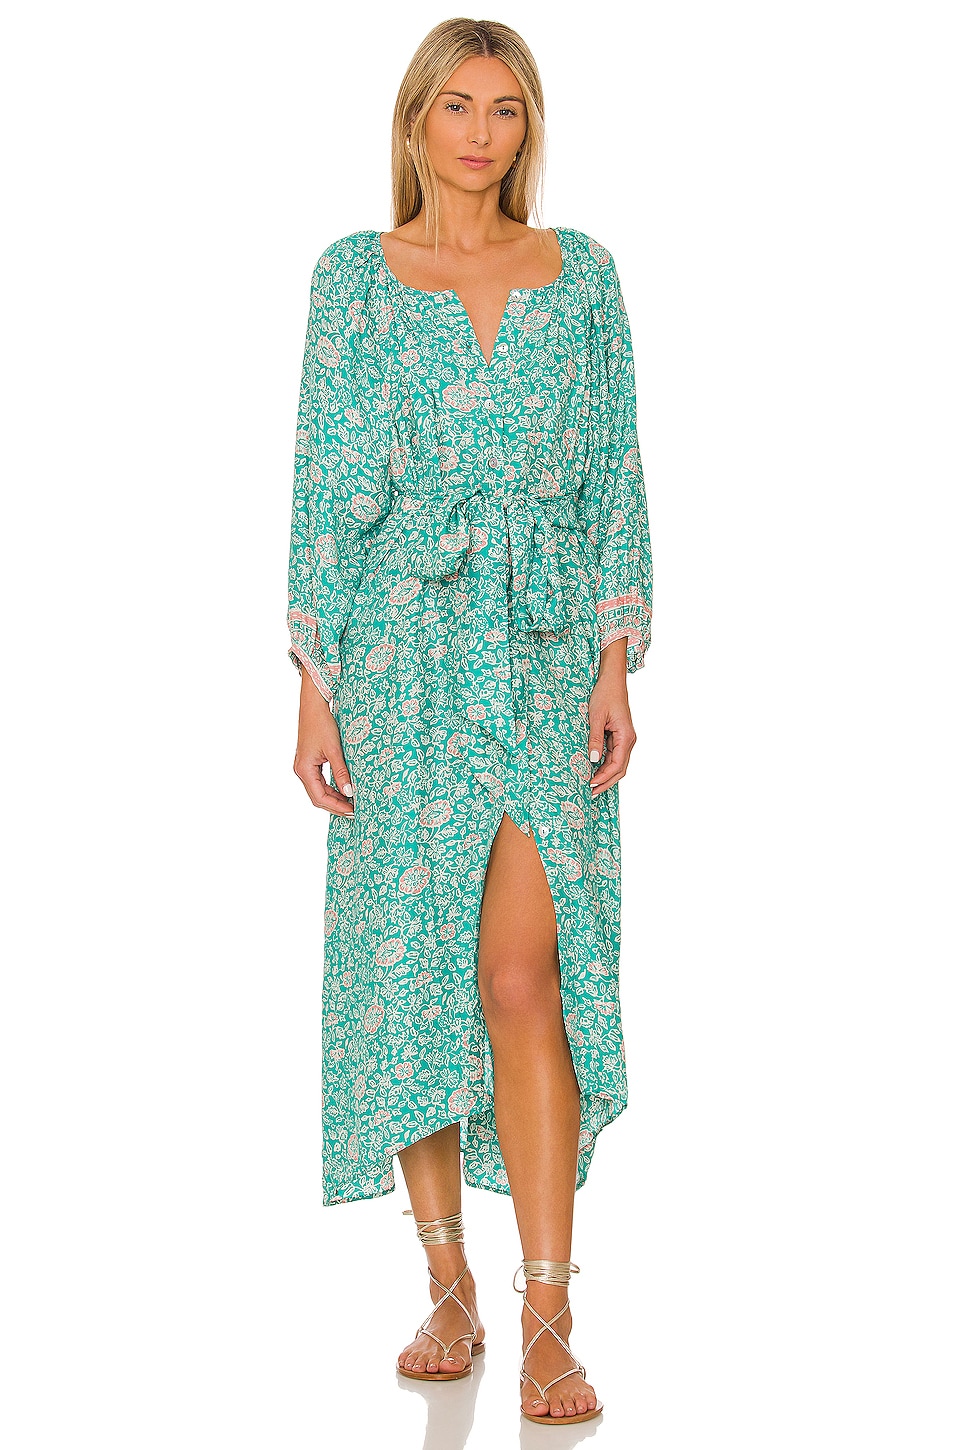 Natalie Martin Alex Sash Dress in Floral Print Amalfi Sea | REVOLVE